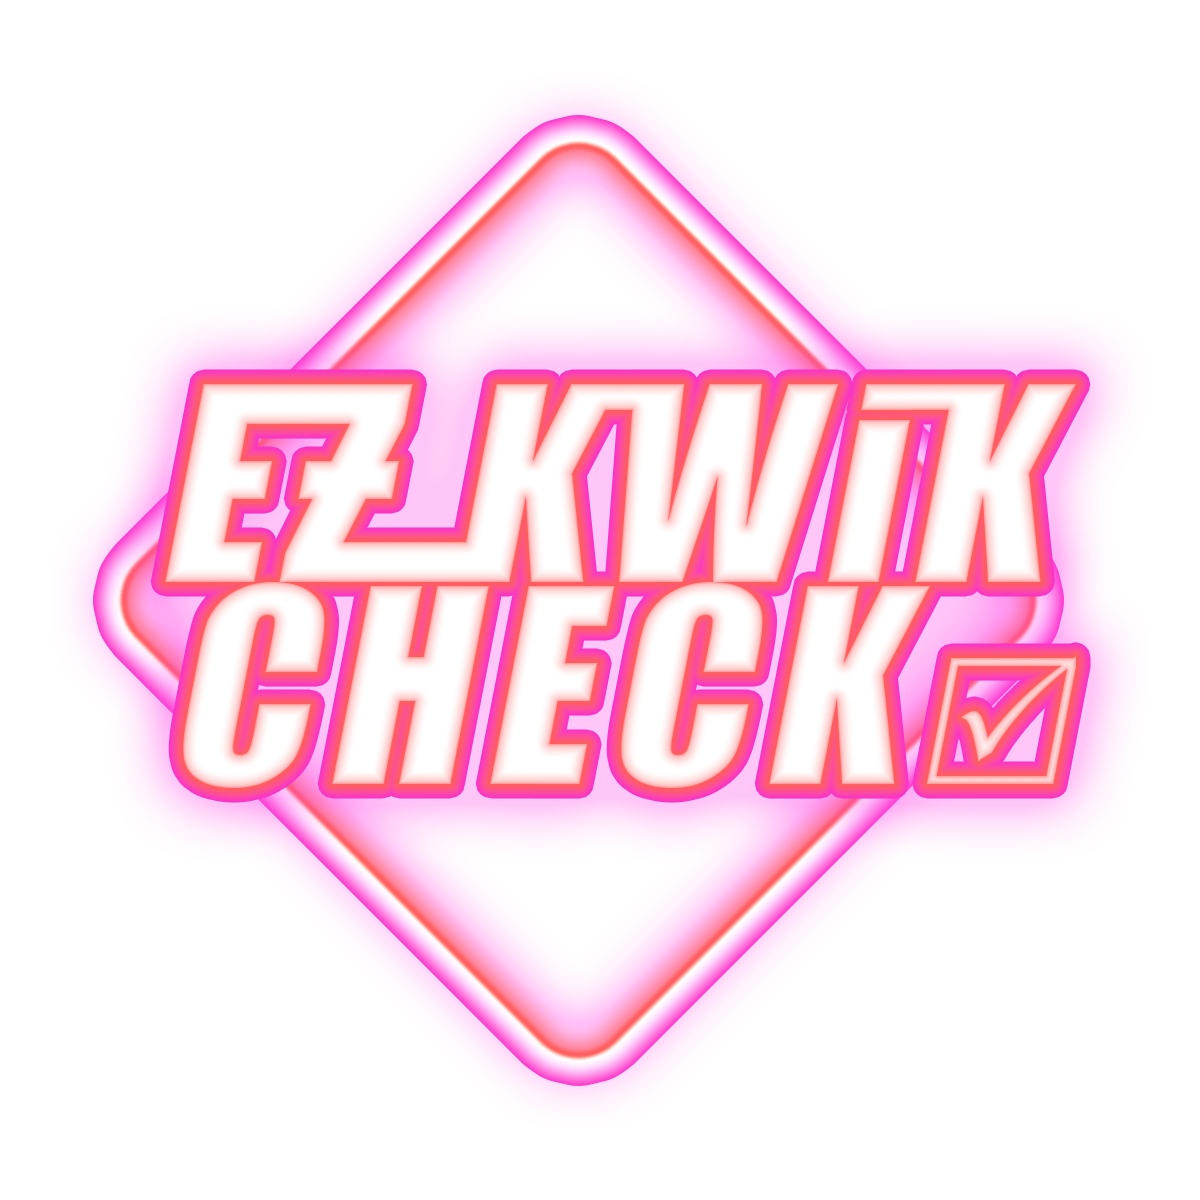 ezkwikcheck-logo.png